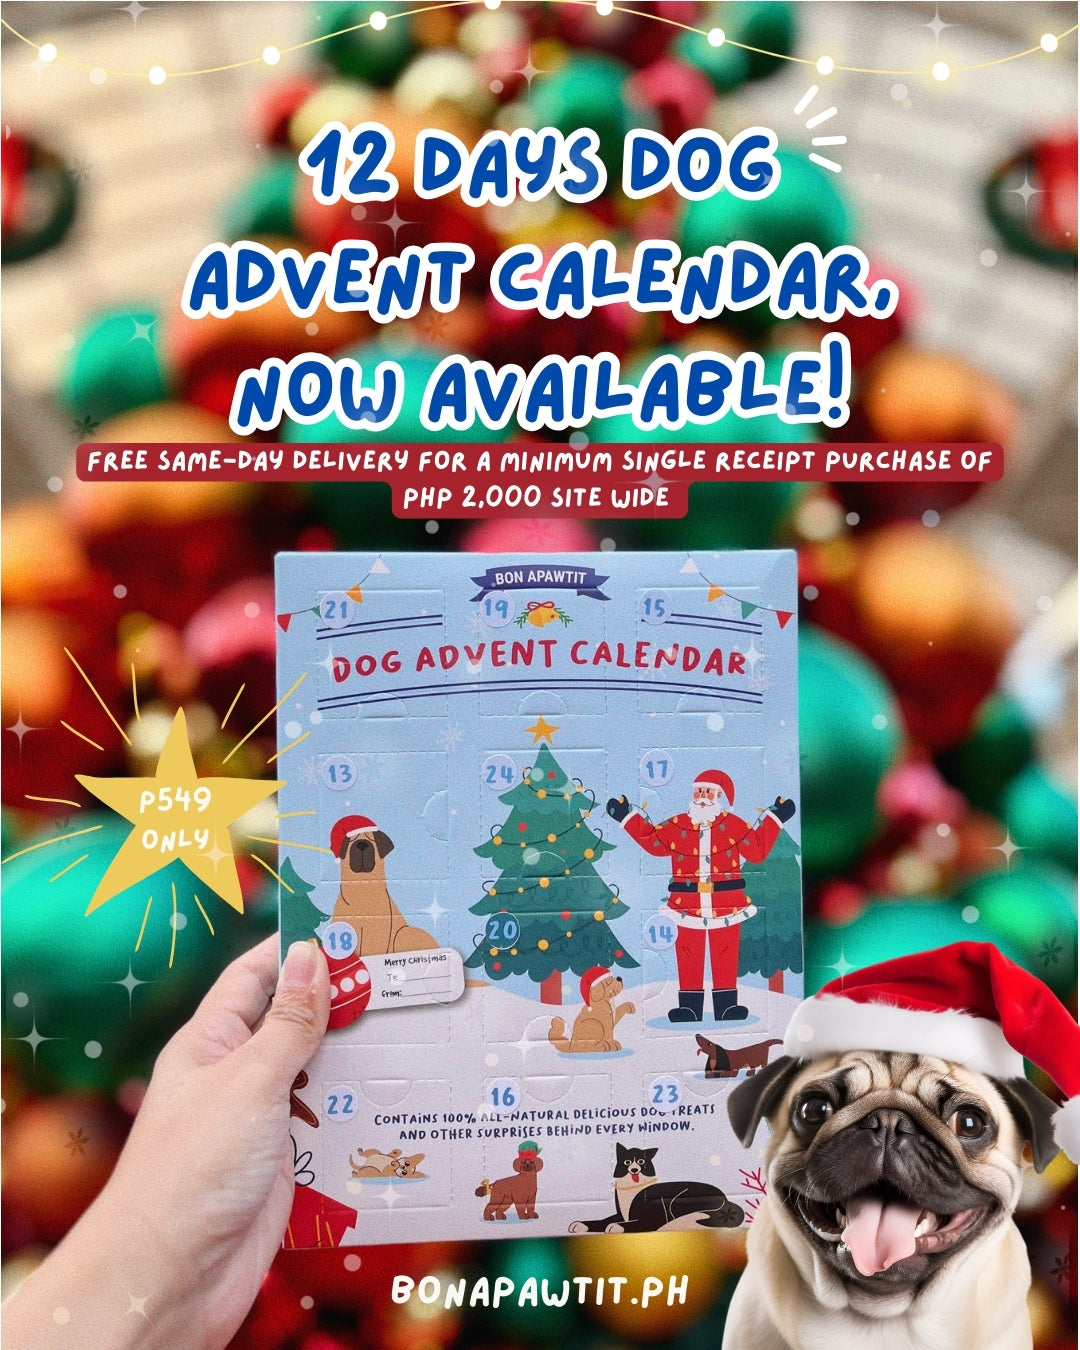 NEW! Dog Advent Calendar (12 days version)